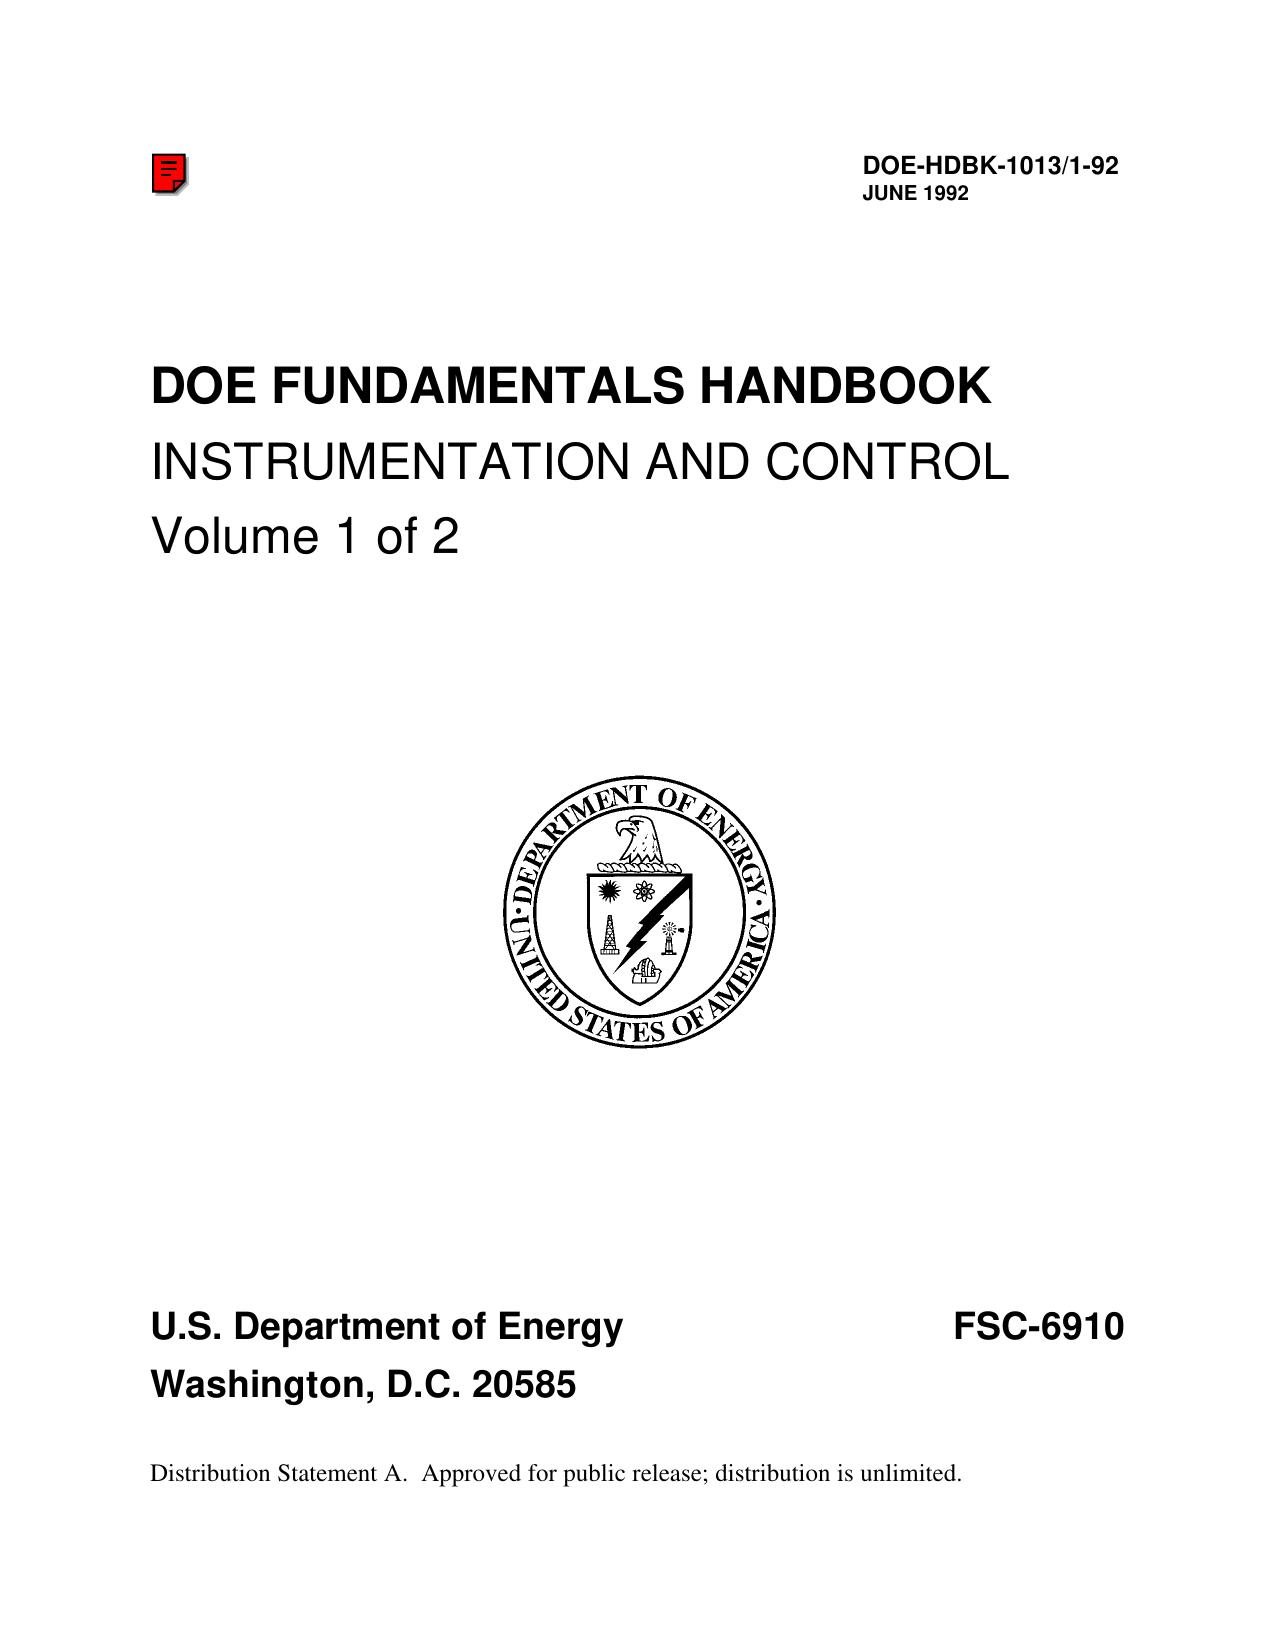 DOE-HDBK-1013/1-92; DOE Fundamentals Handbook Instrumentation and Control Volume 1 of 2